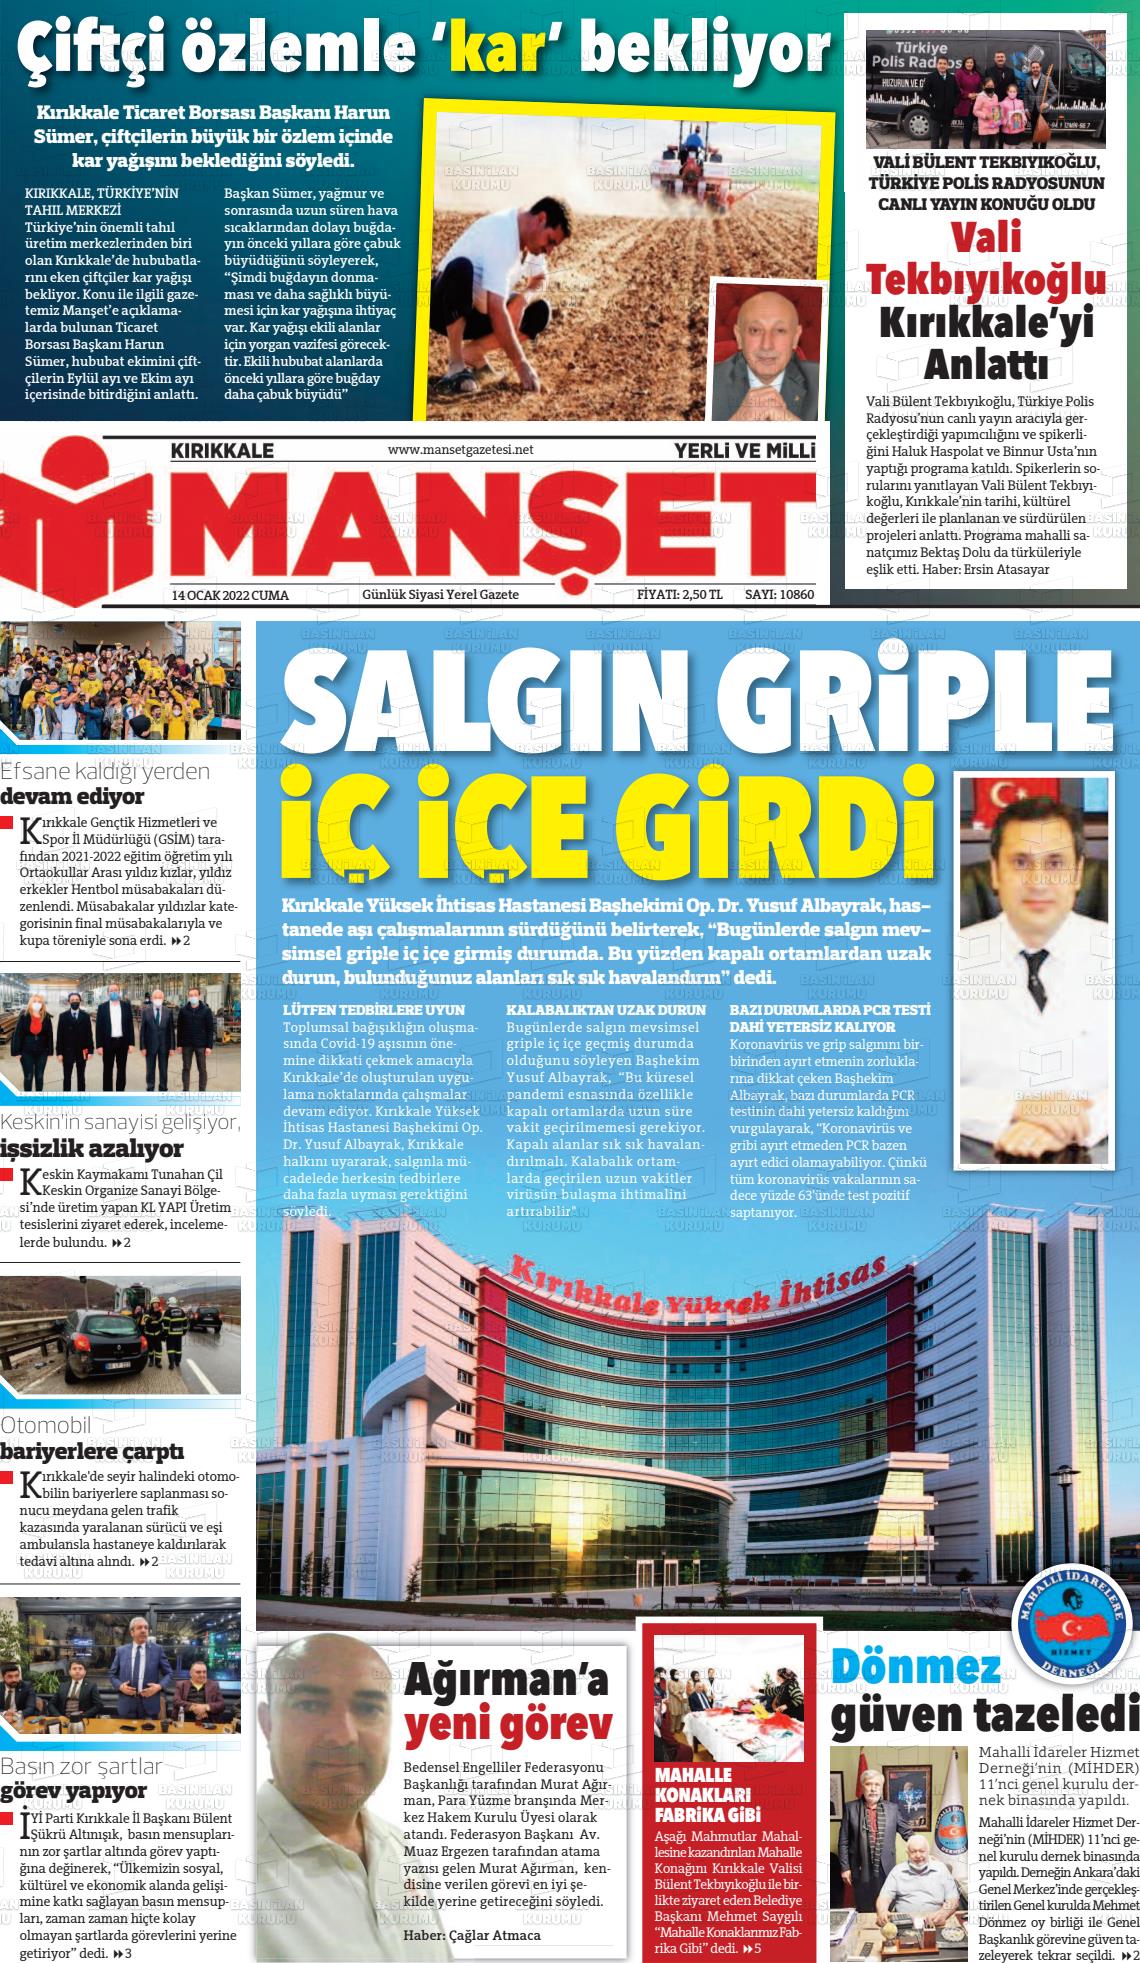 14 Ocak 2022 Kırıkkale Manşet Gazete Manşeti